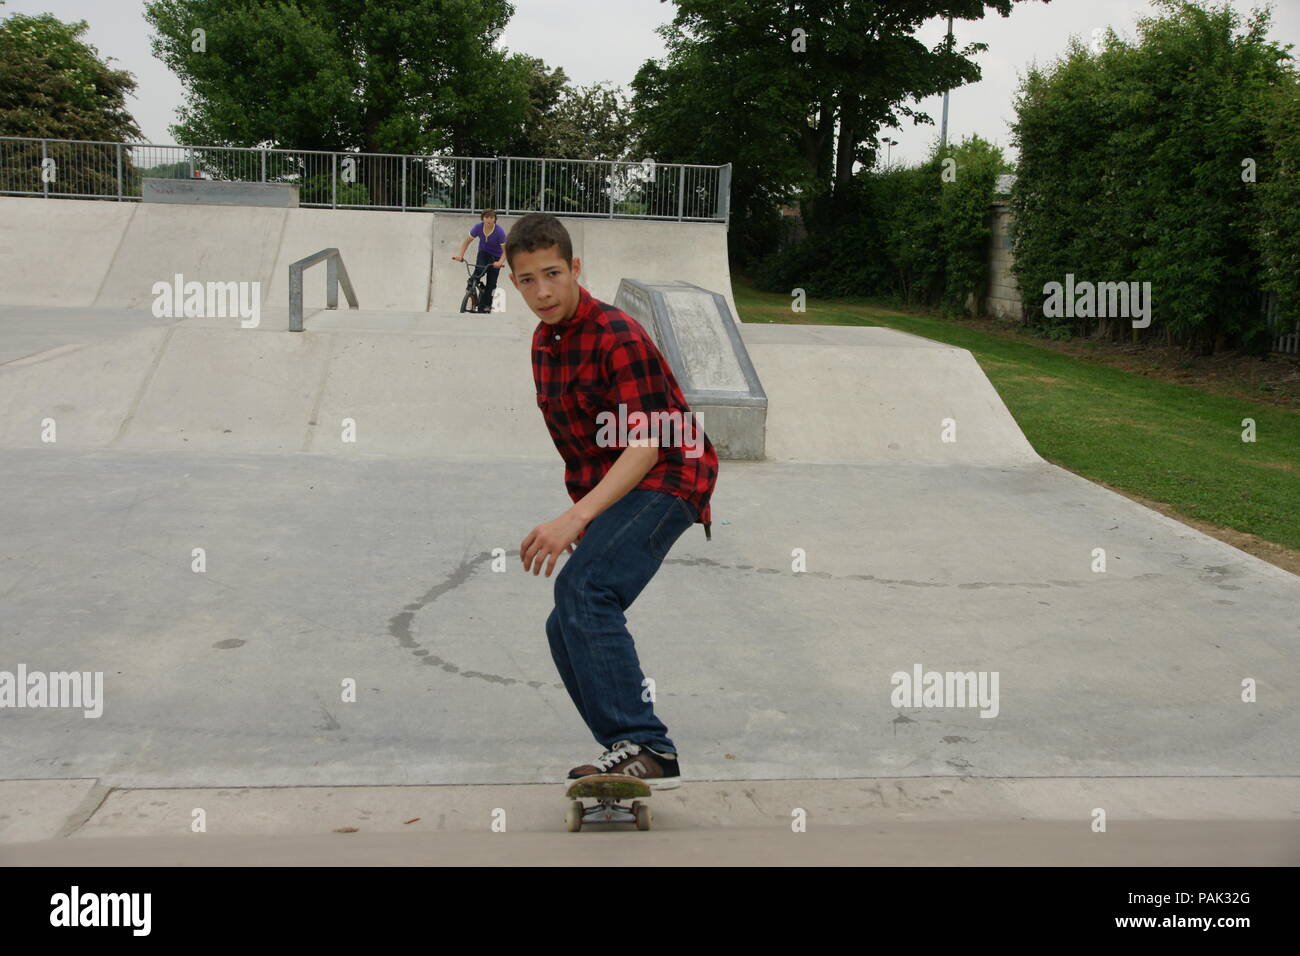 Skateboarding at a skate park Stock Photo